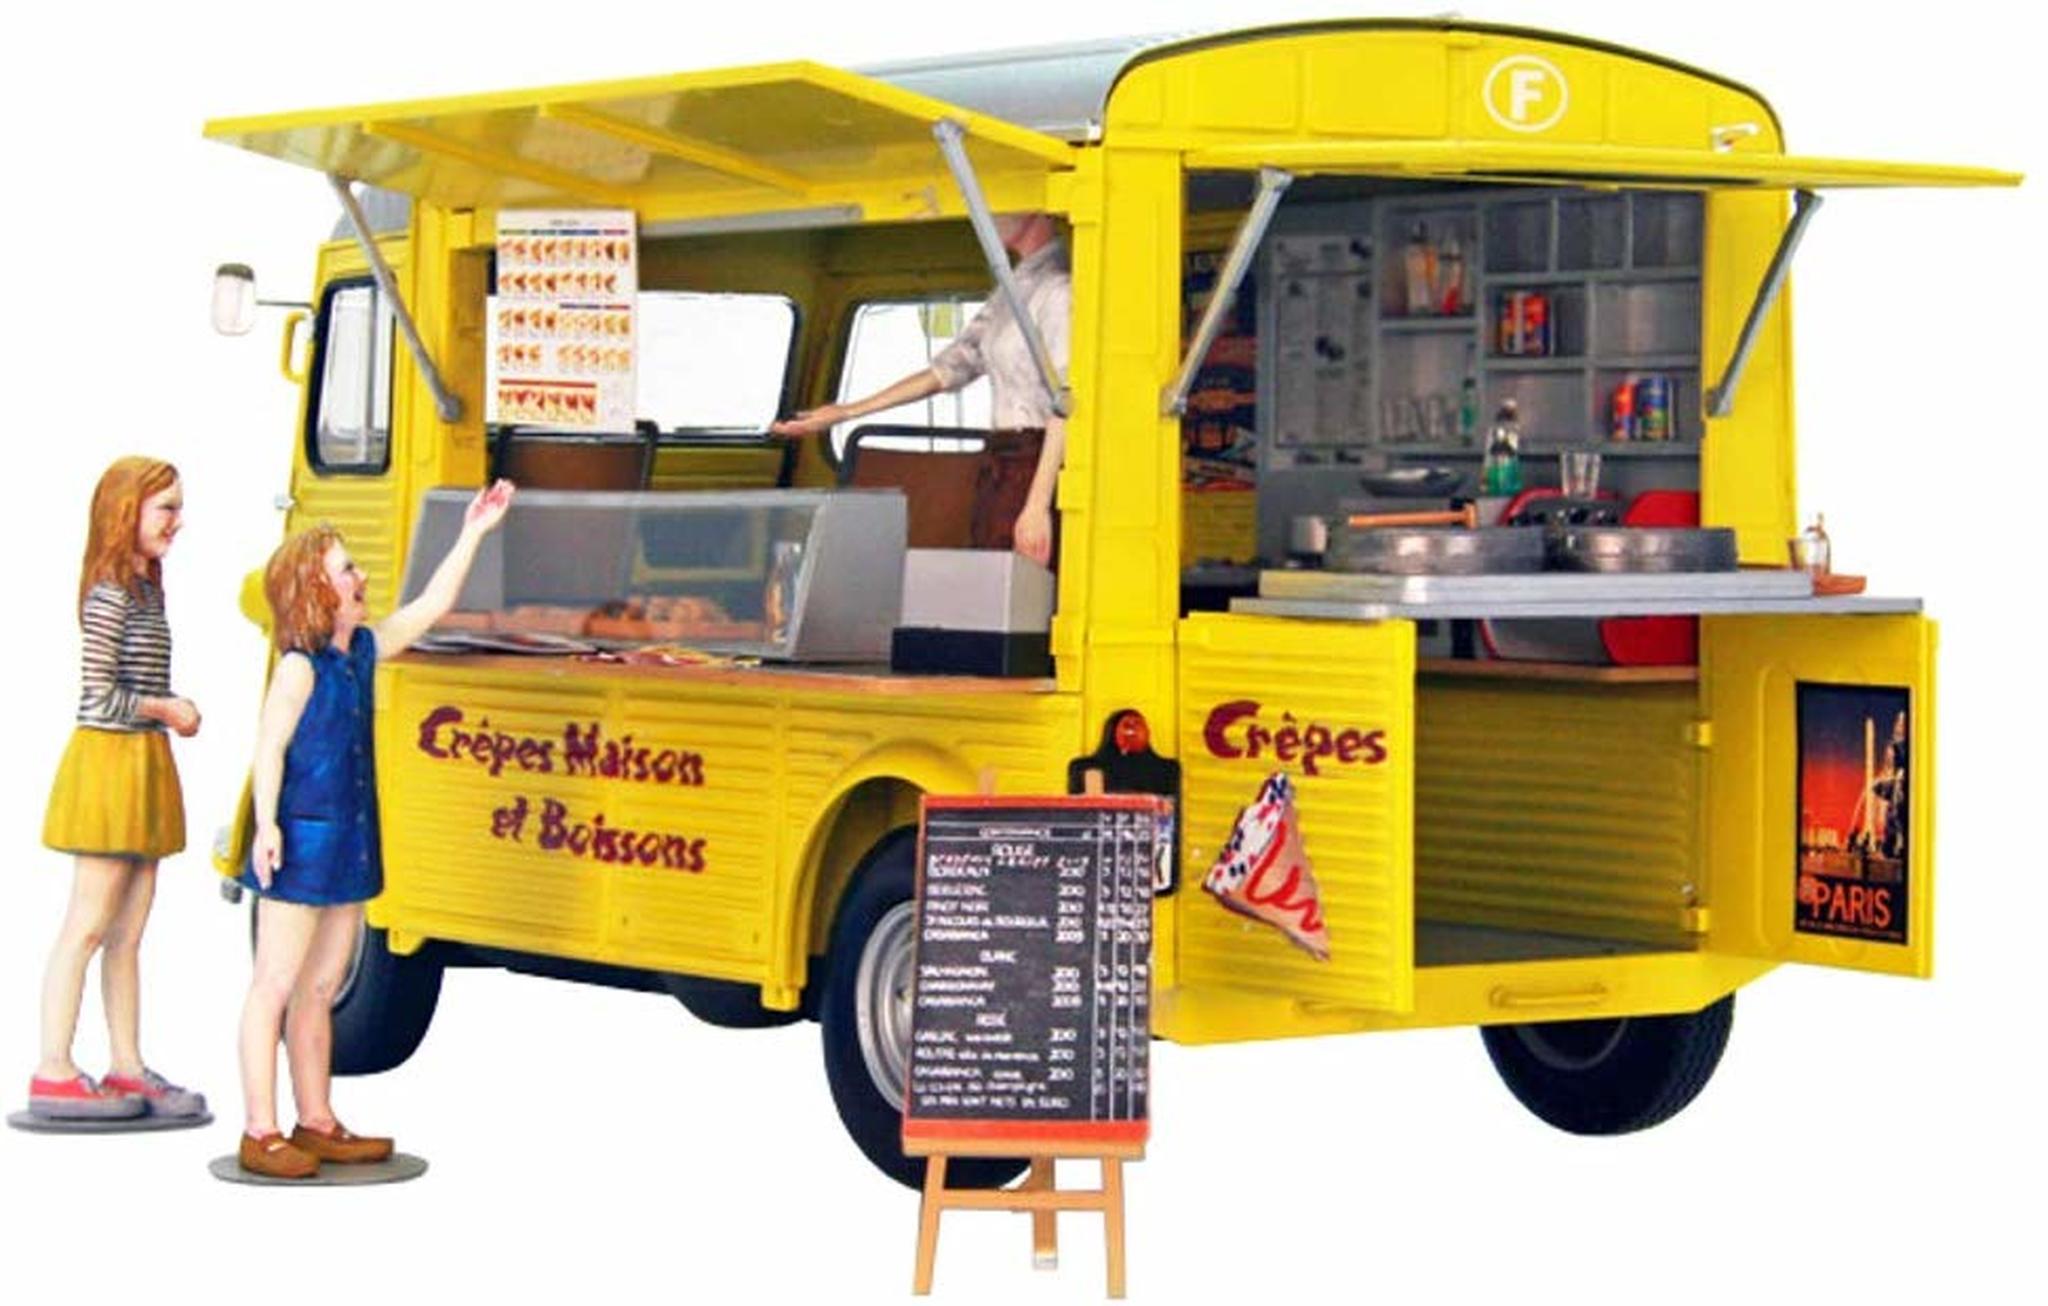 EB25013 - Citroen 1/24 Type H Crepe Mobile Food Truck